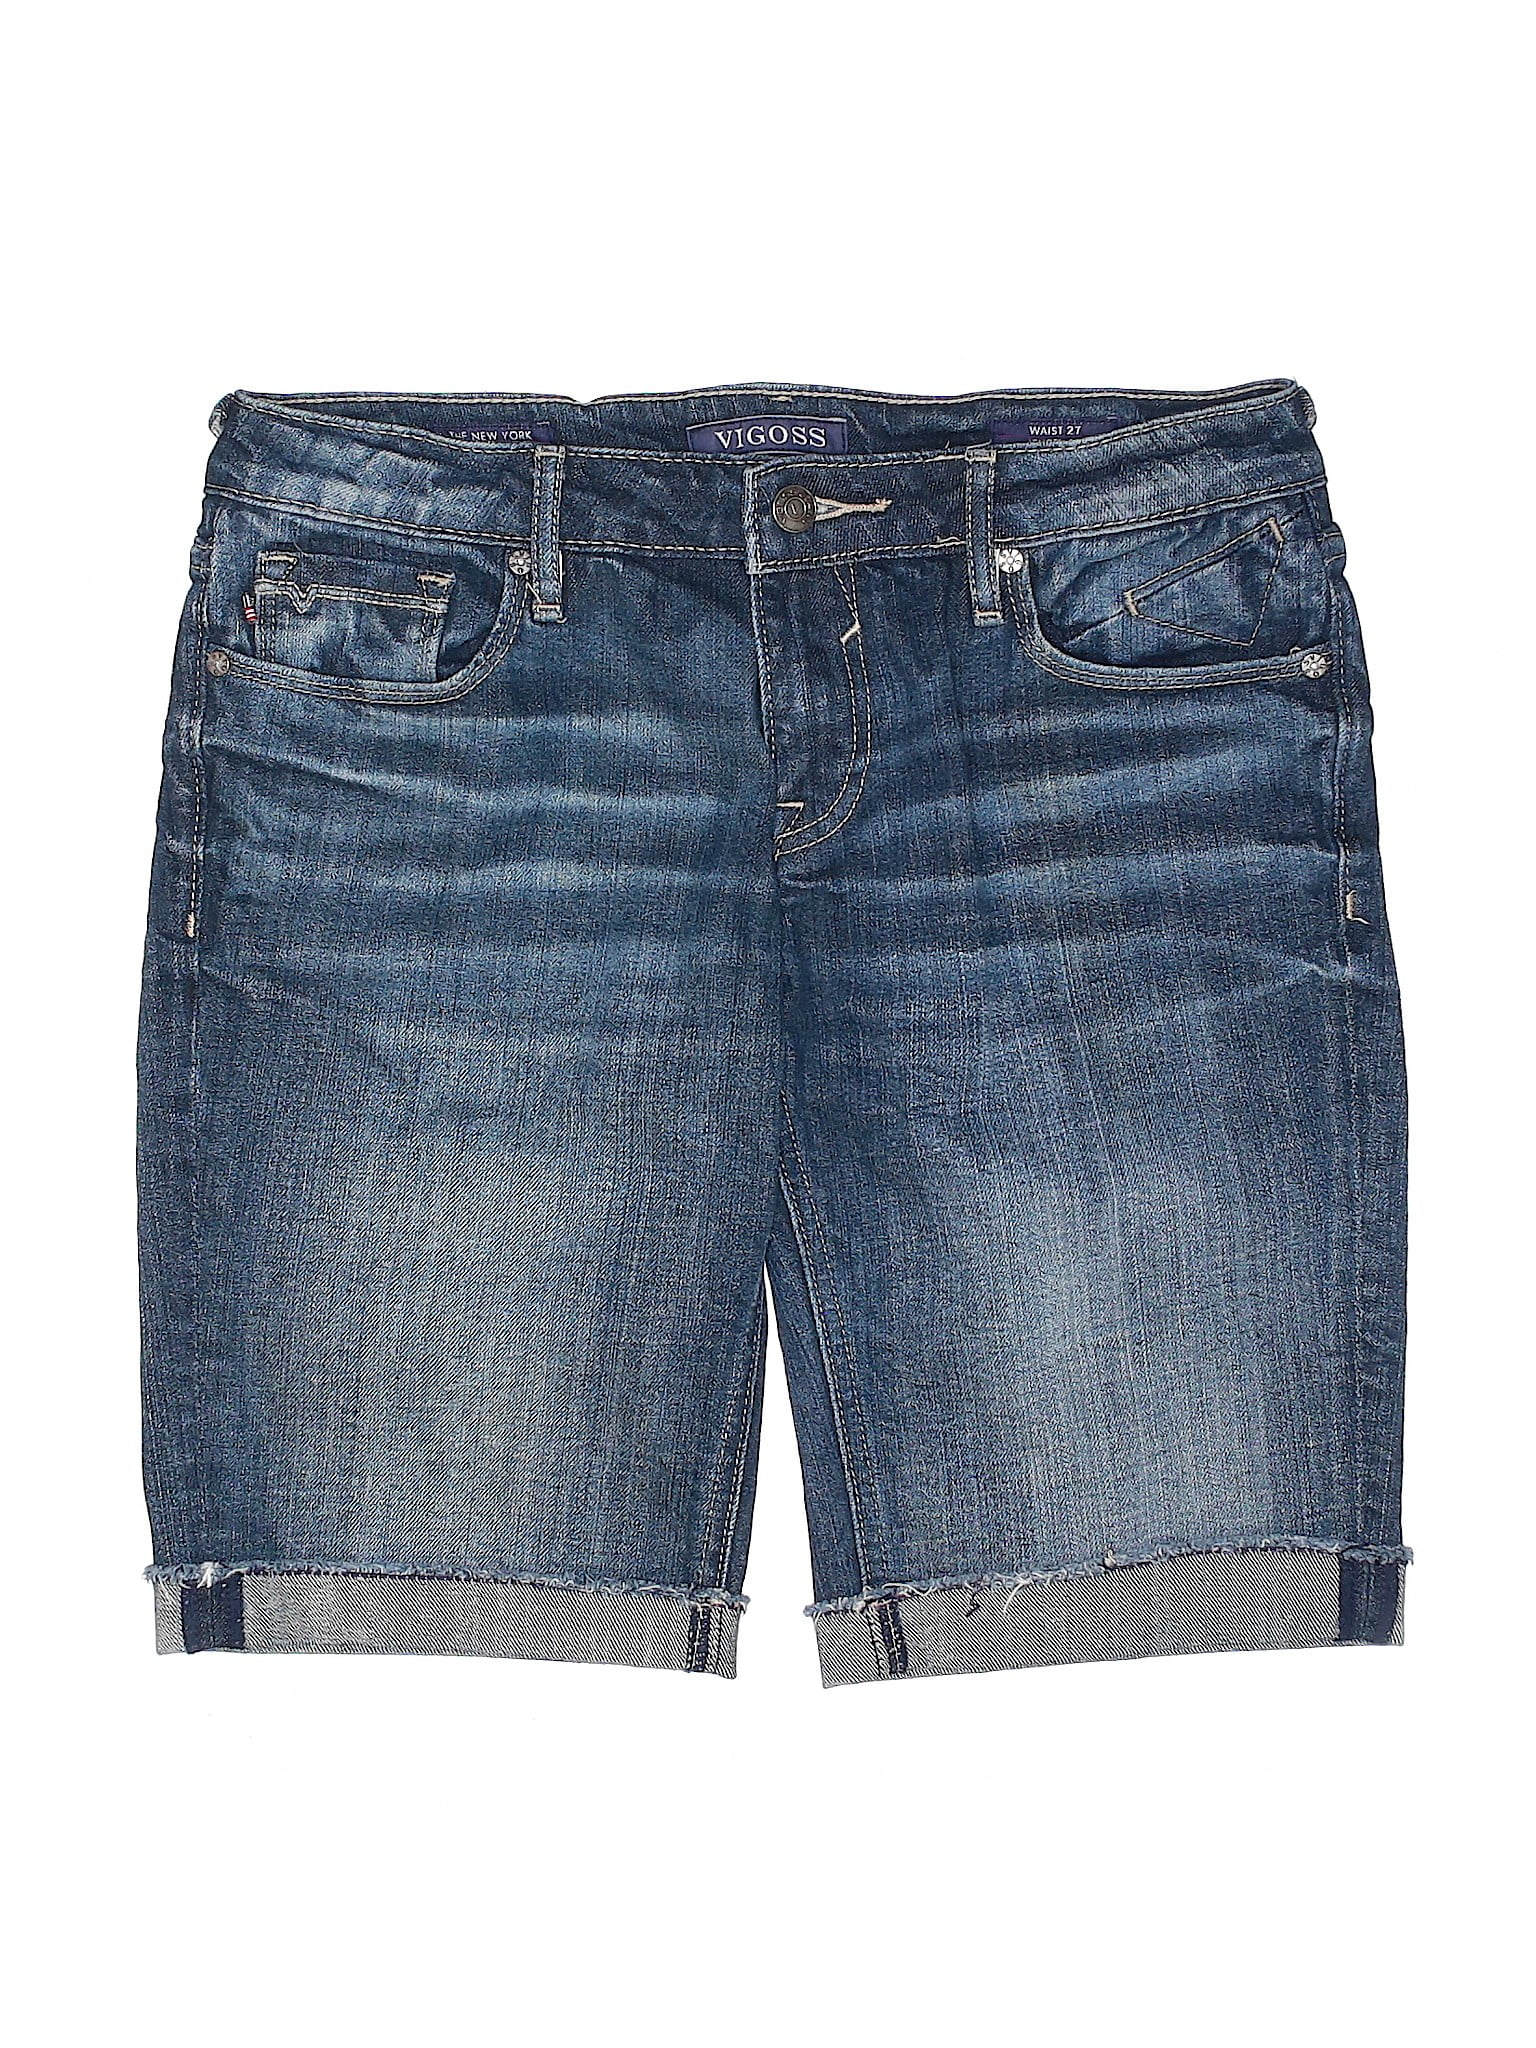 Vigoss - Pre-Owned Vigoss Women's Size 27W Denim Shorts - Walmart.com ...